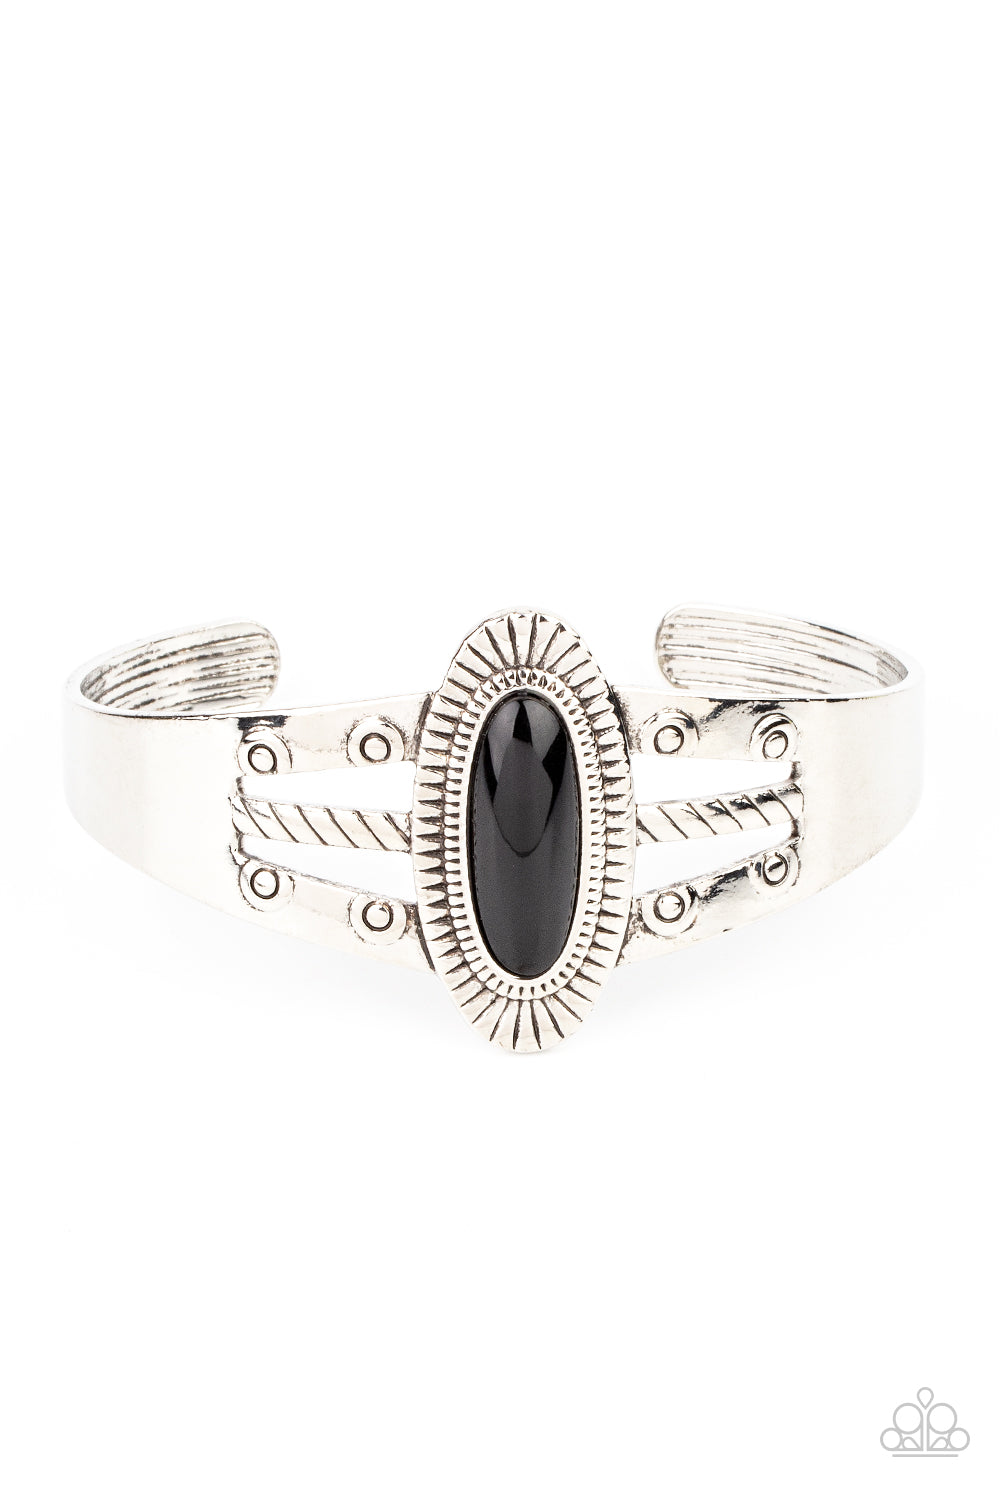 Silver bracelet with Black stone